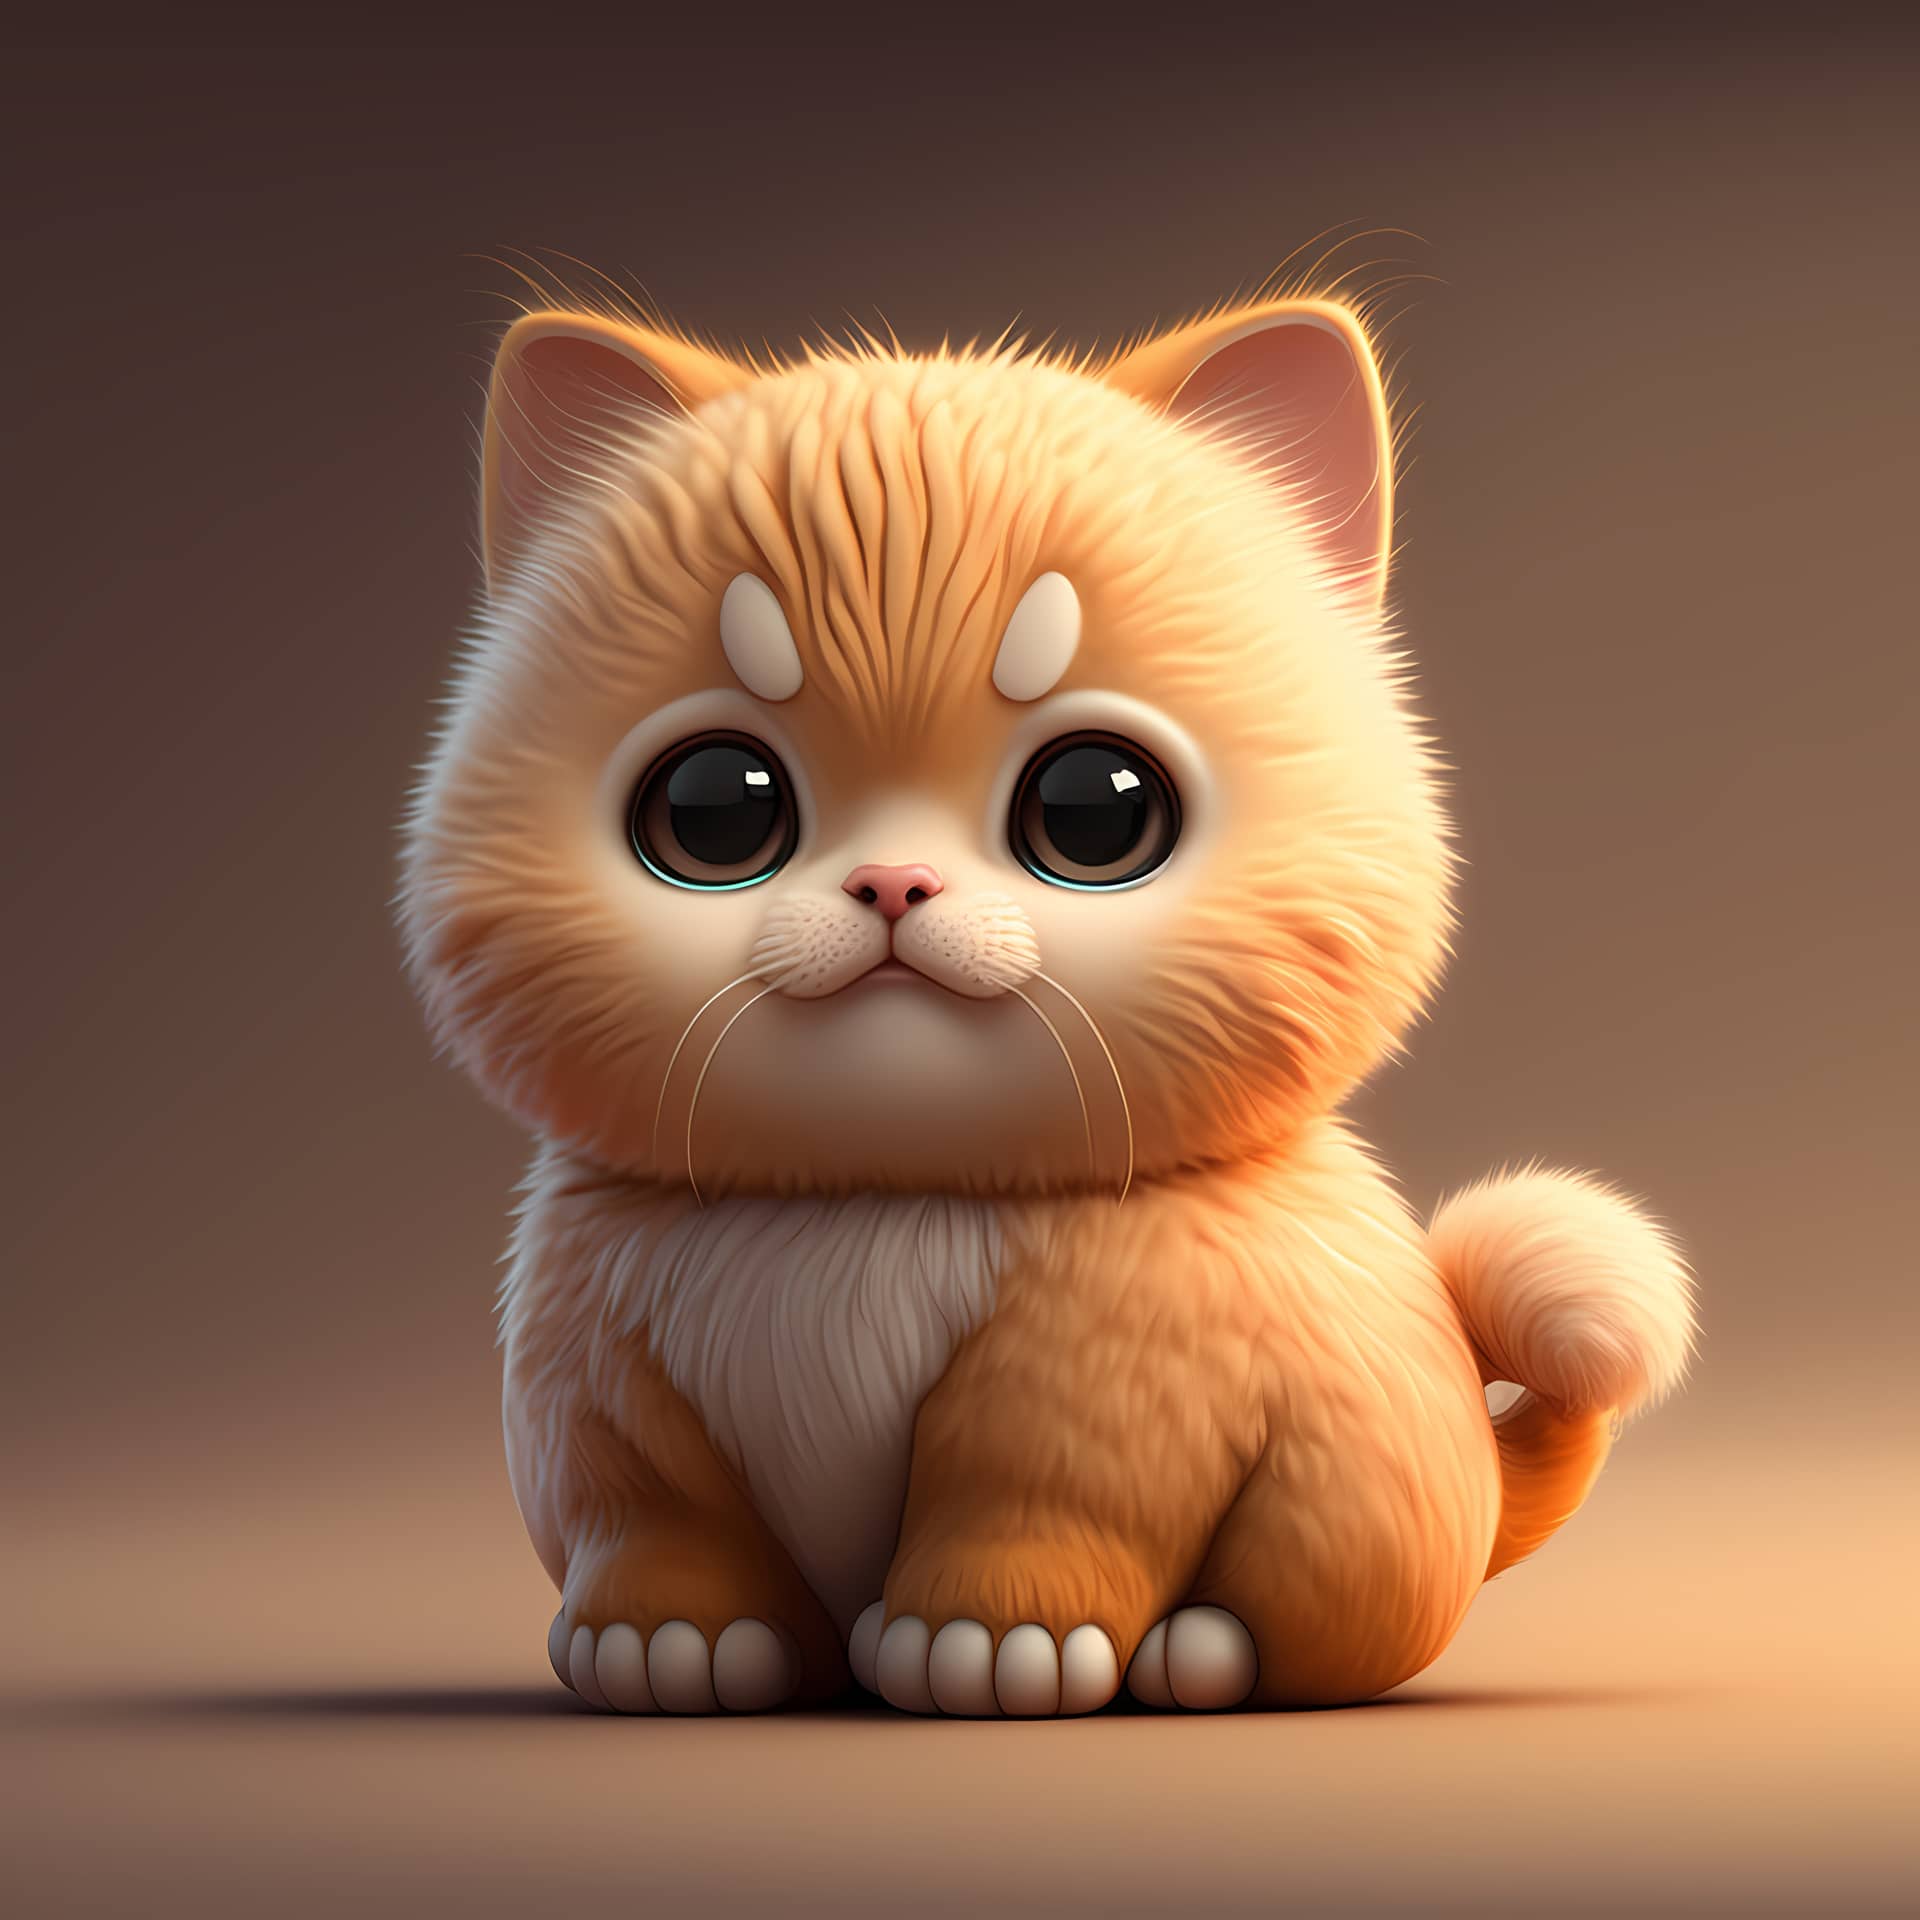 Adorable cute chubby cat 3d render image cute profile photos